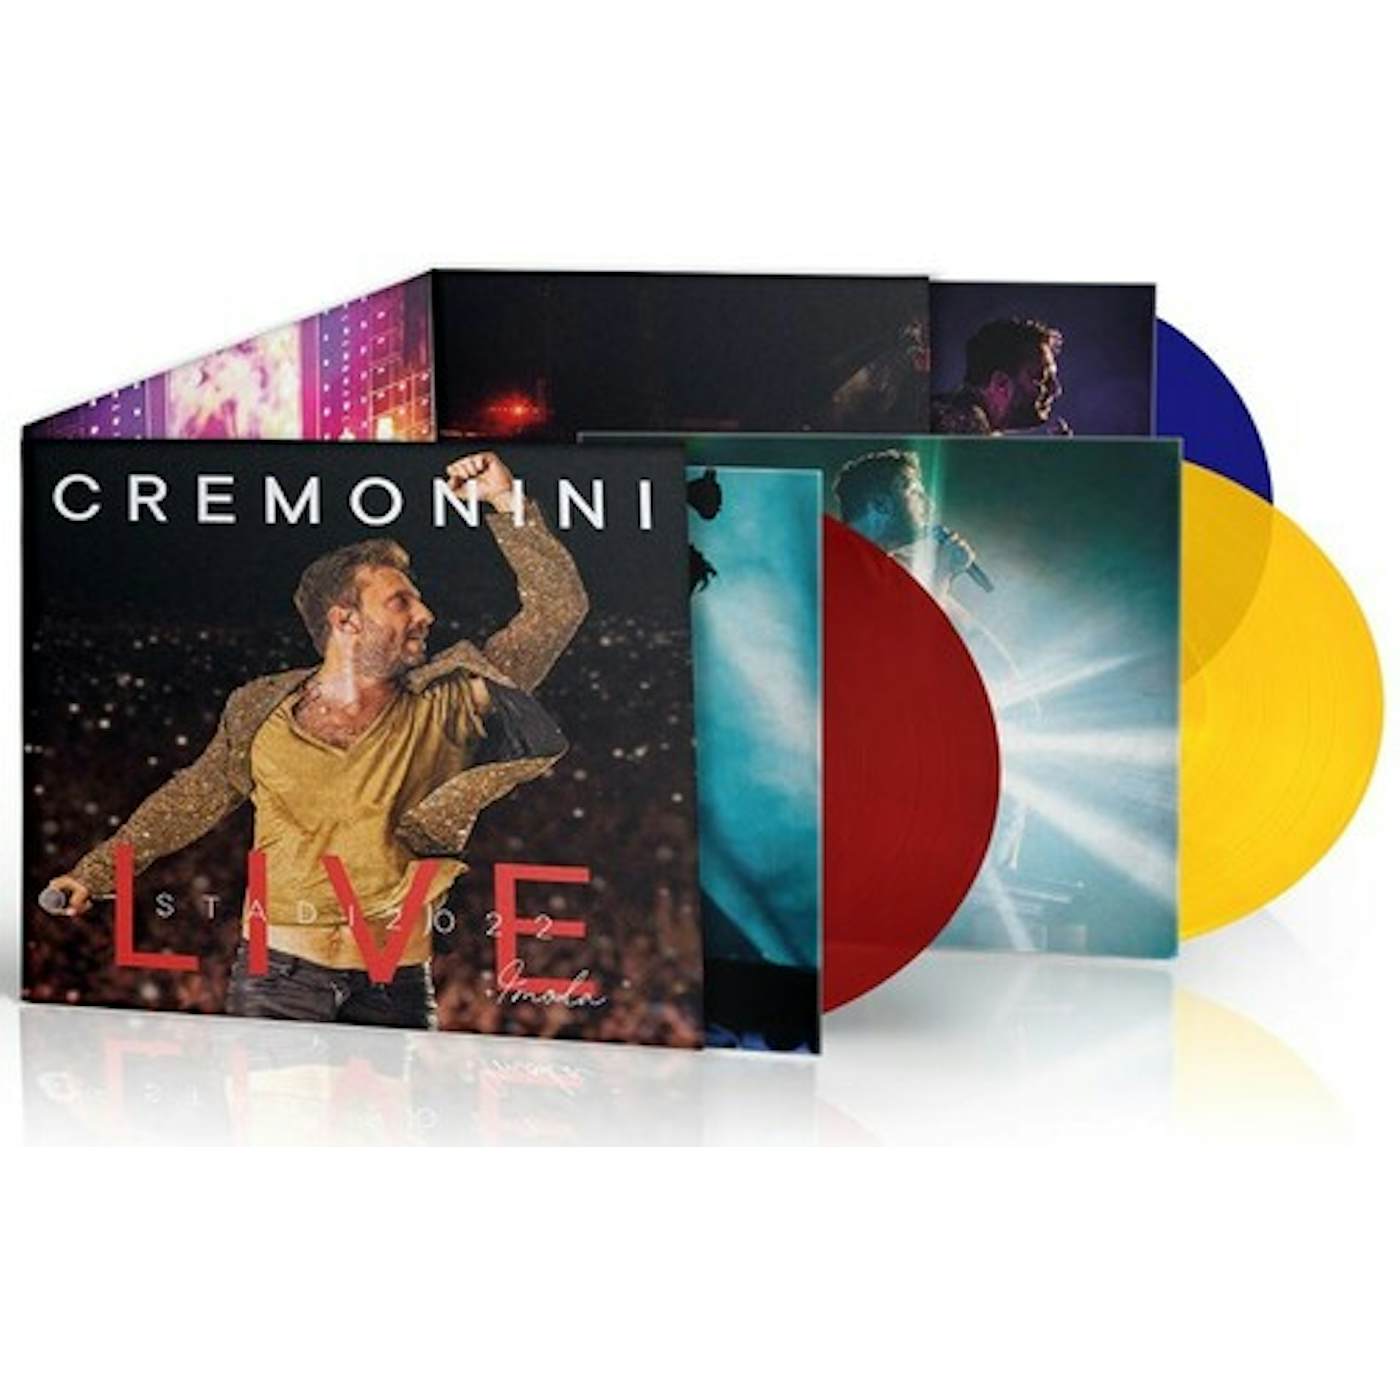 Cesare Cremonini Cremonini Live: Stadi 2022 + Imola Vinyl Record